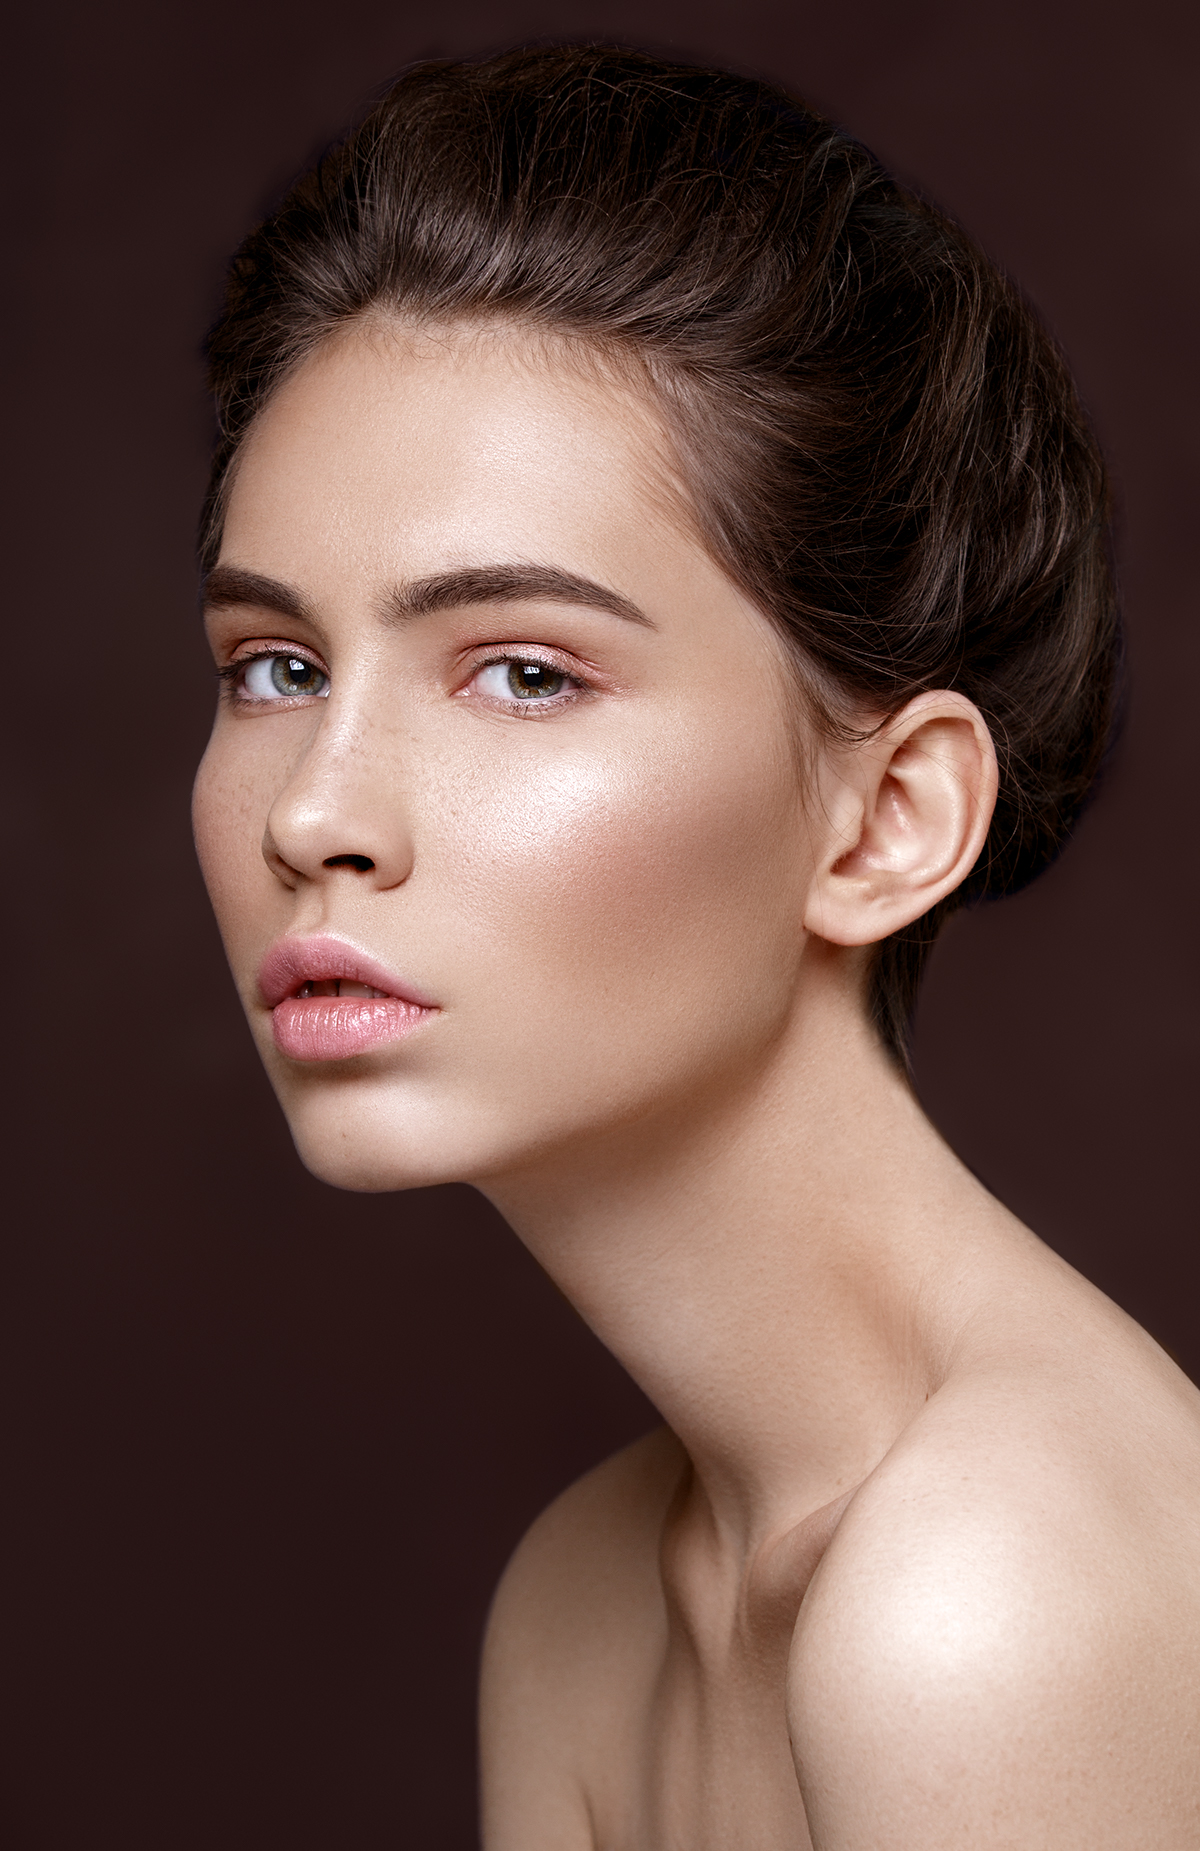 postproduction skinretouching skin beauty Beautyretouching portrait digital face modeling model retouch Edite editorial